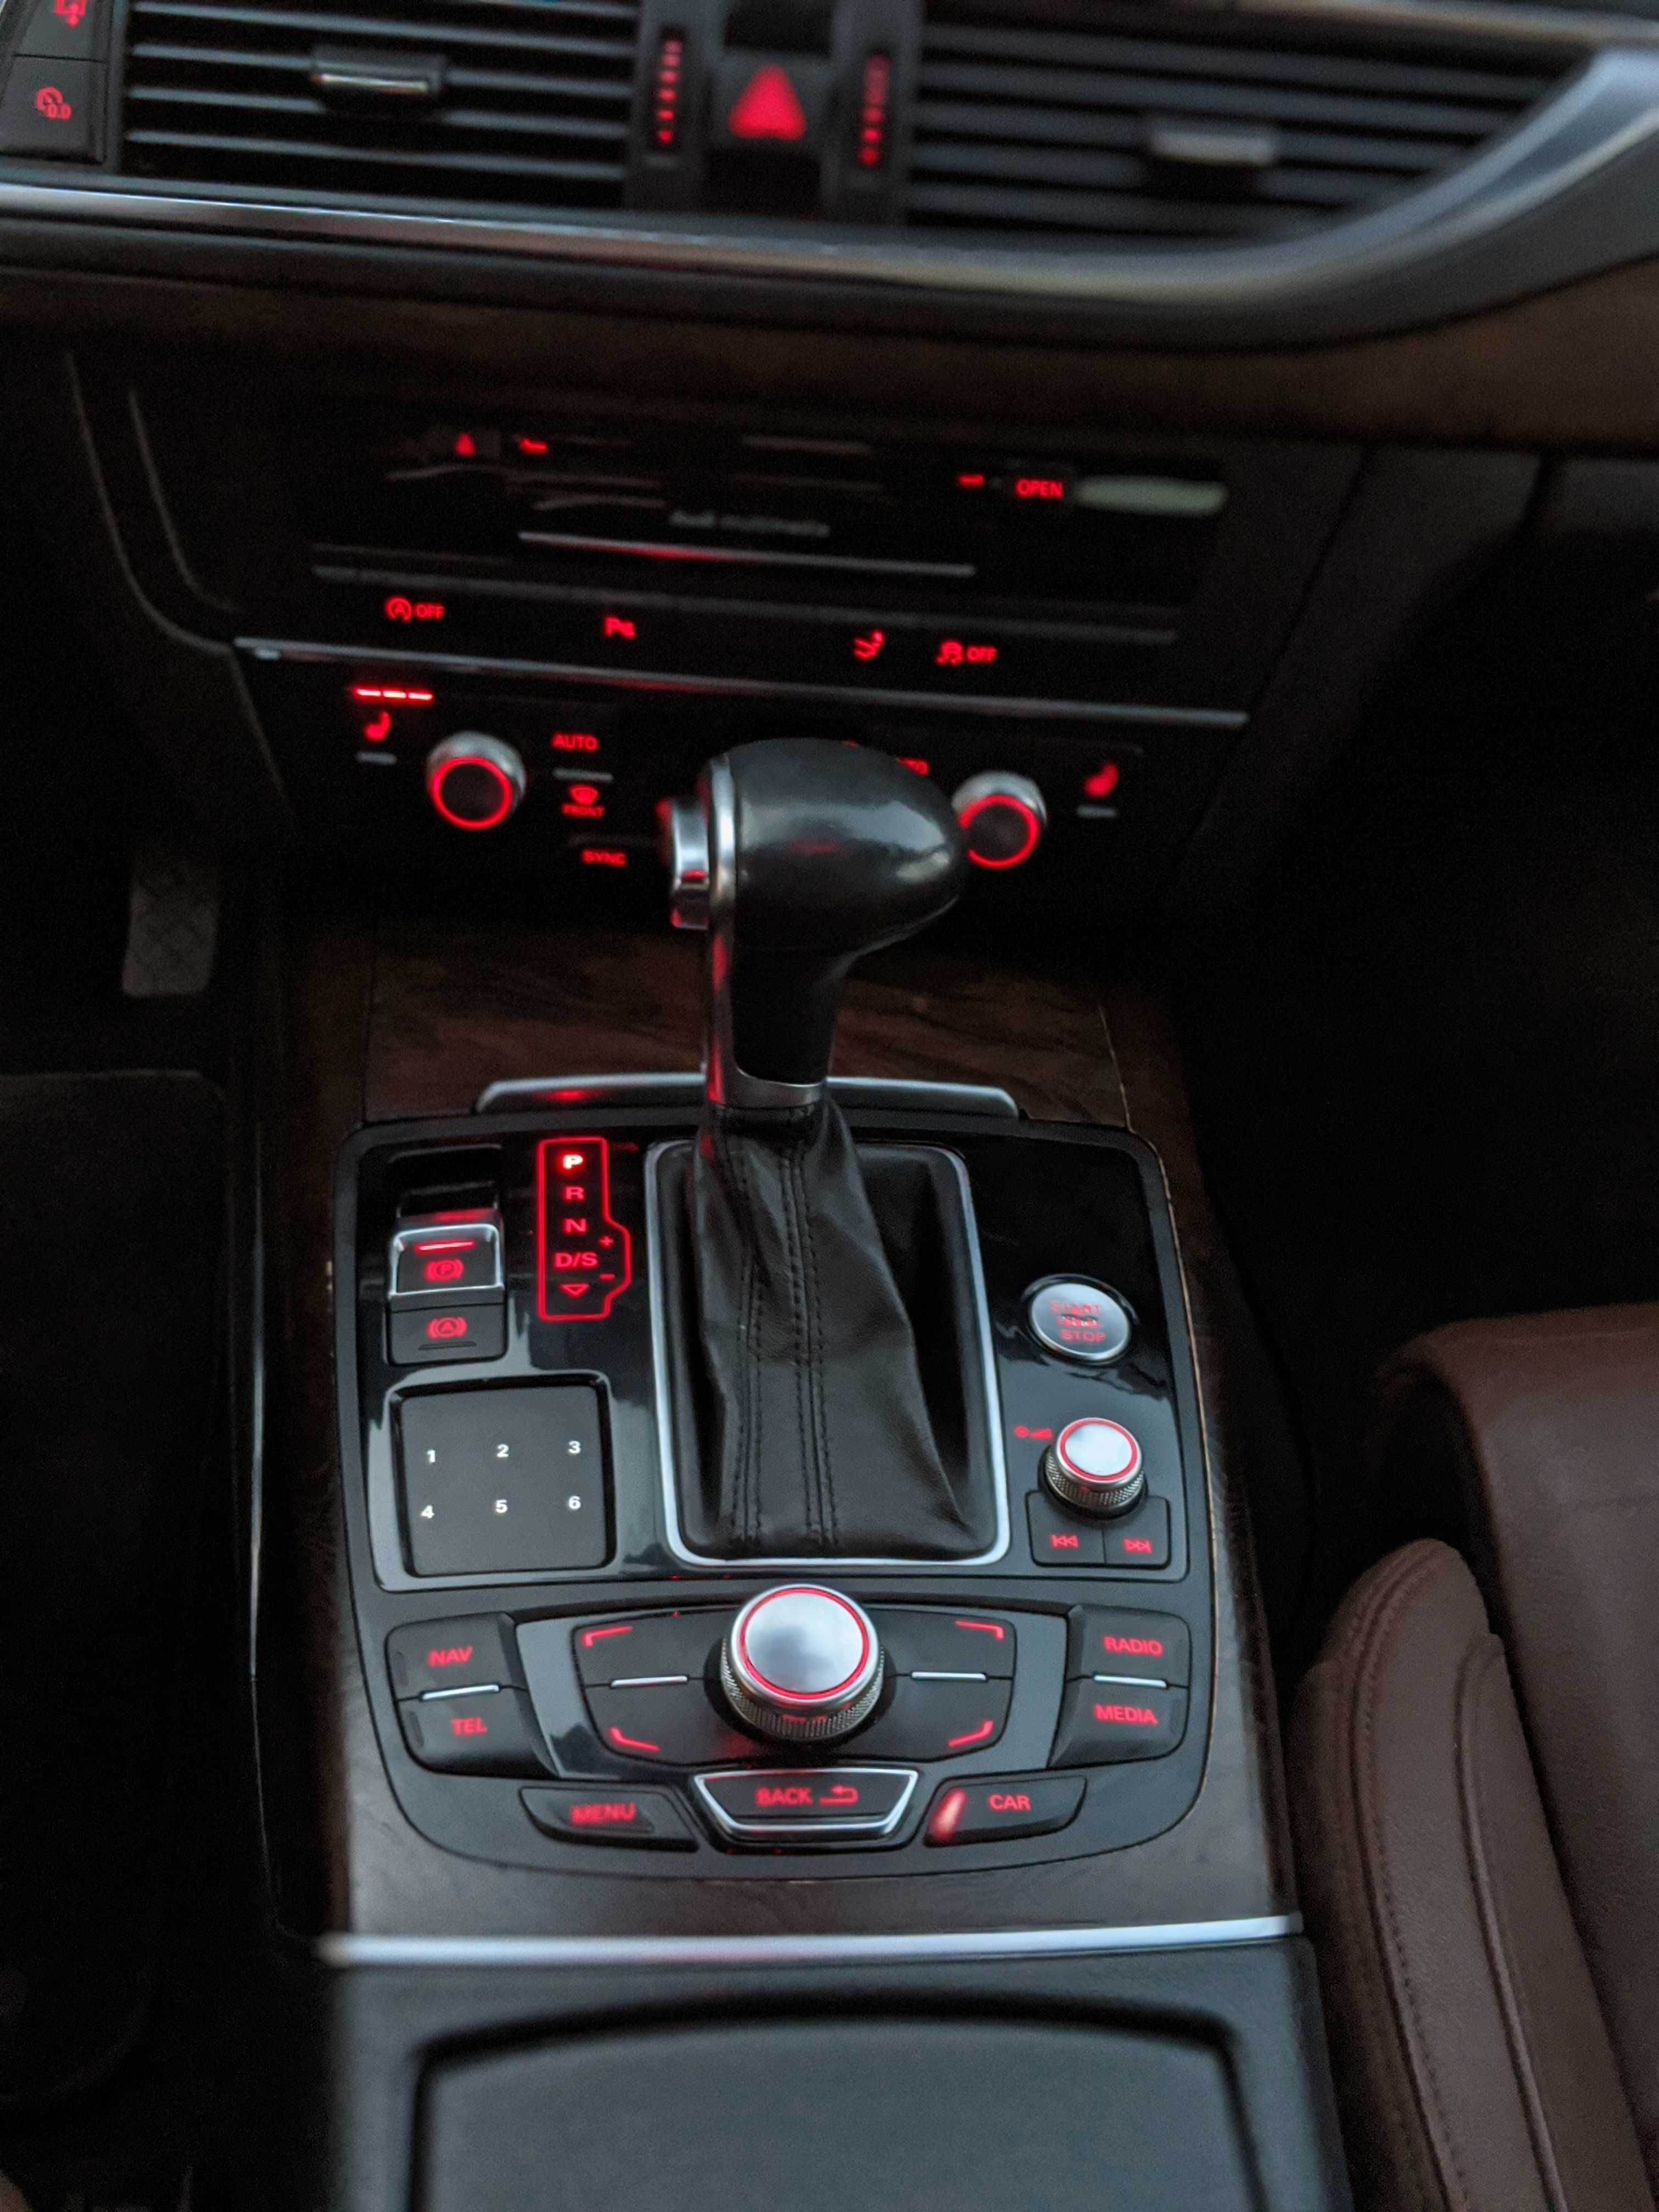 Audi A7 3.0 TDI V6 (245 CP) quattro, perne, s-tronic 7 trepte (padele)